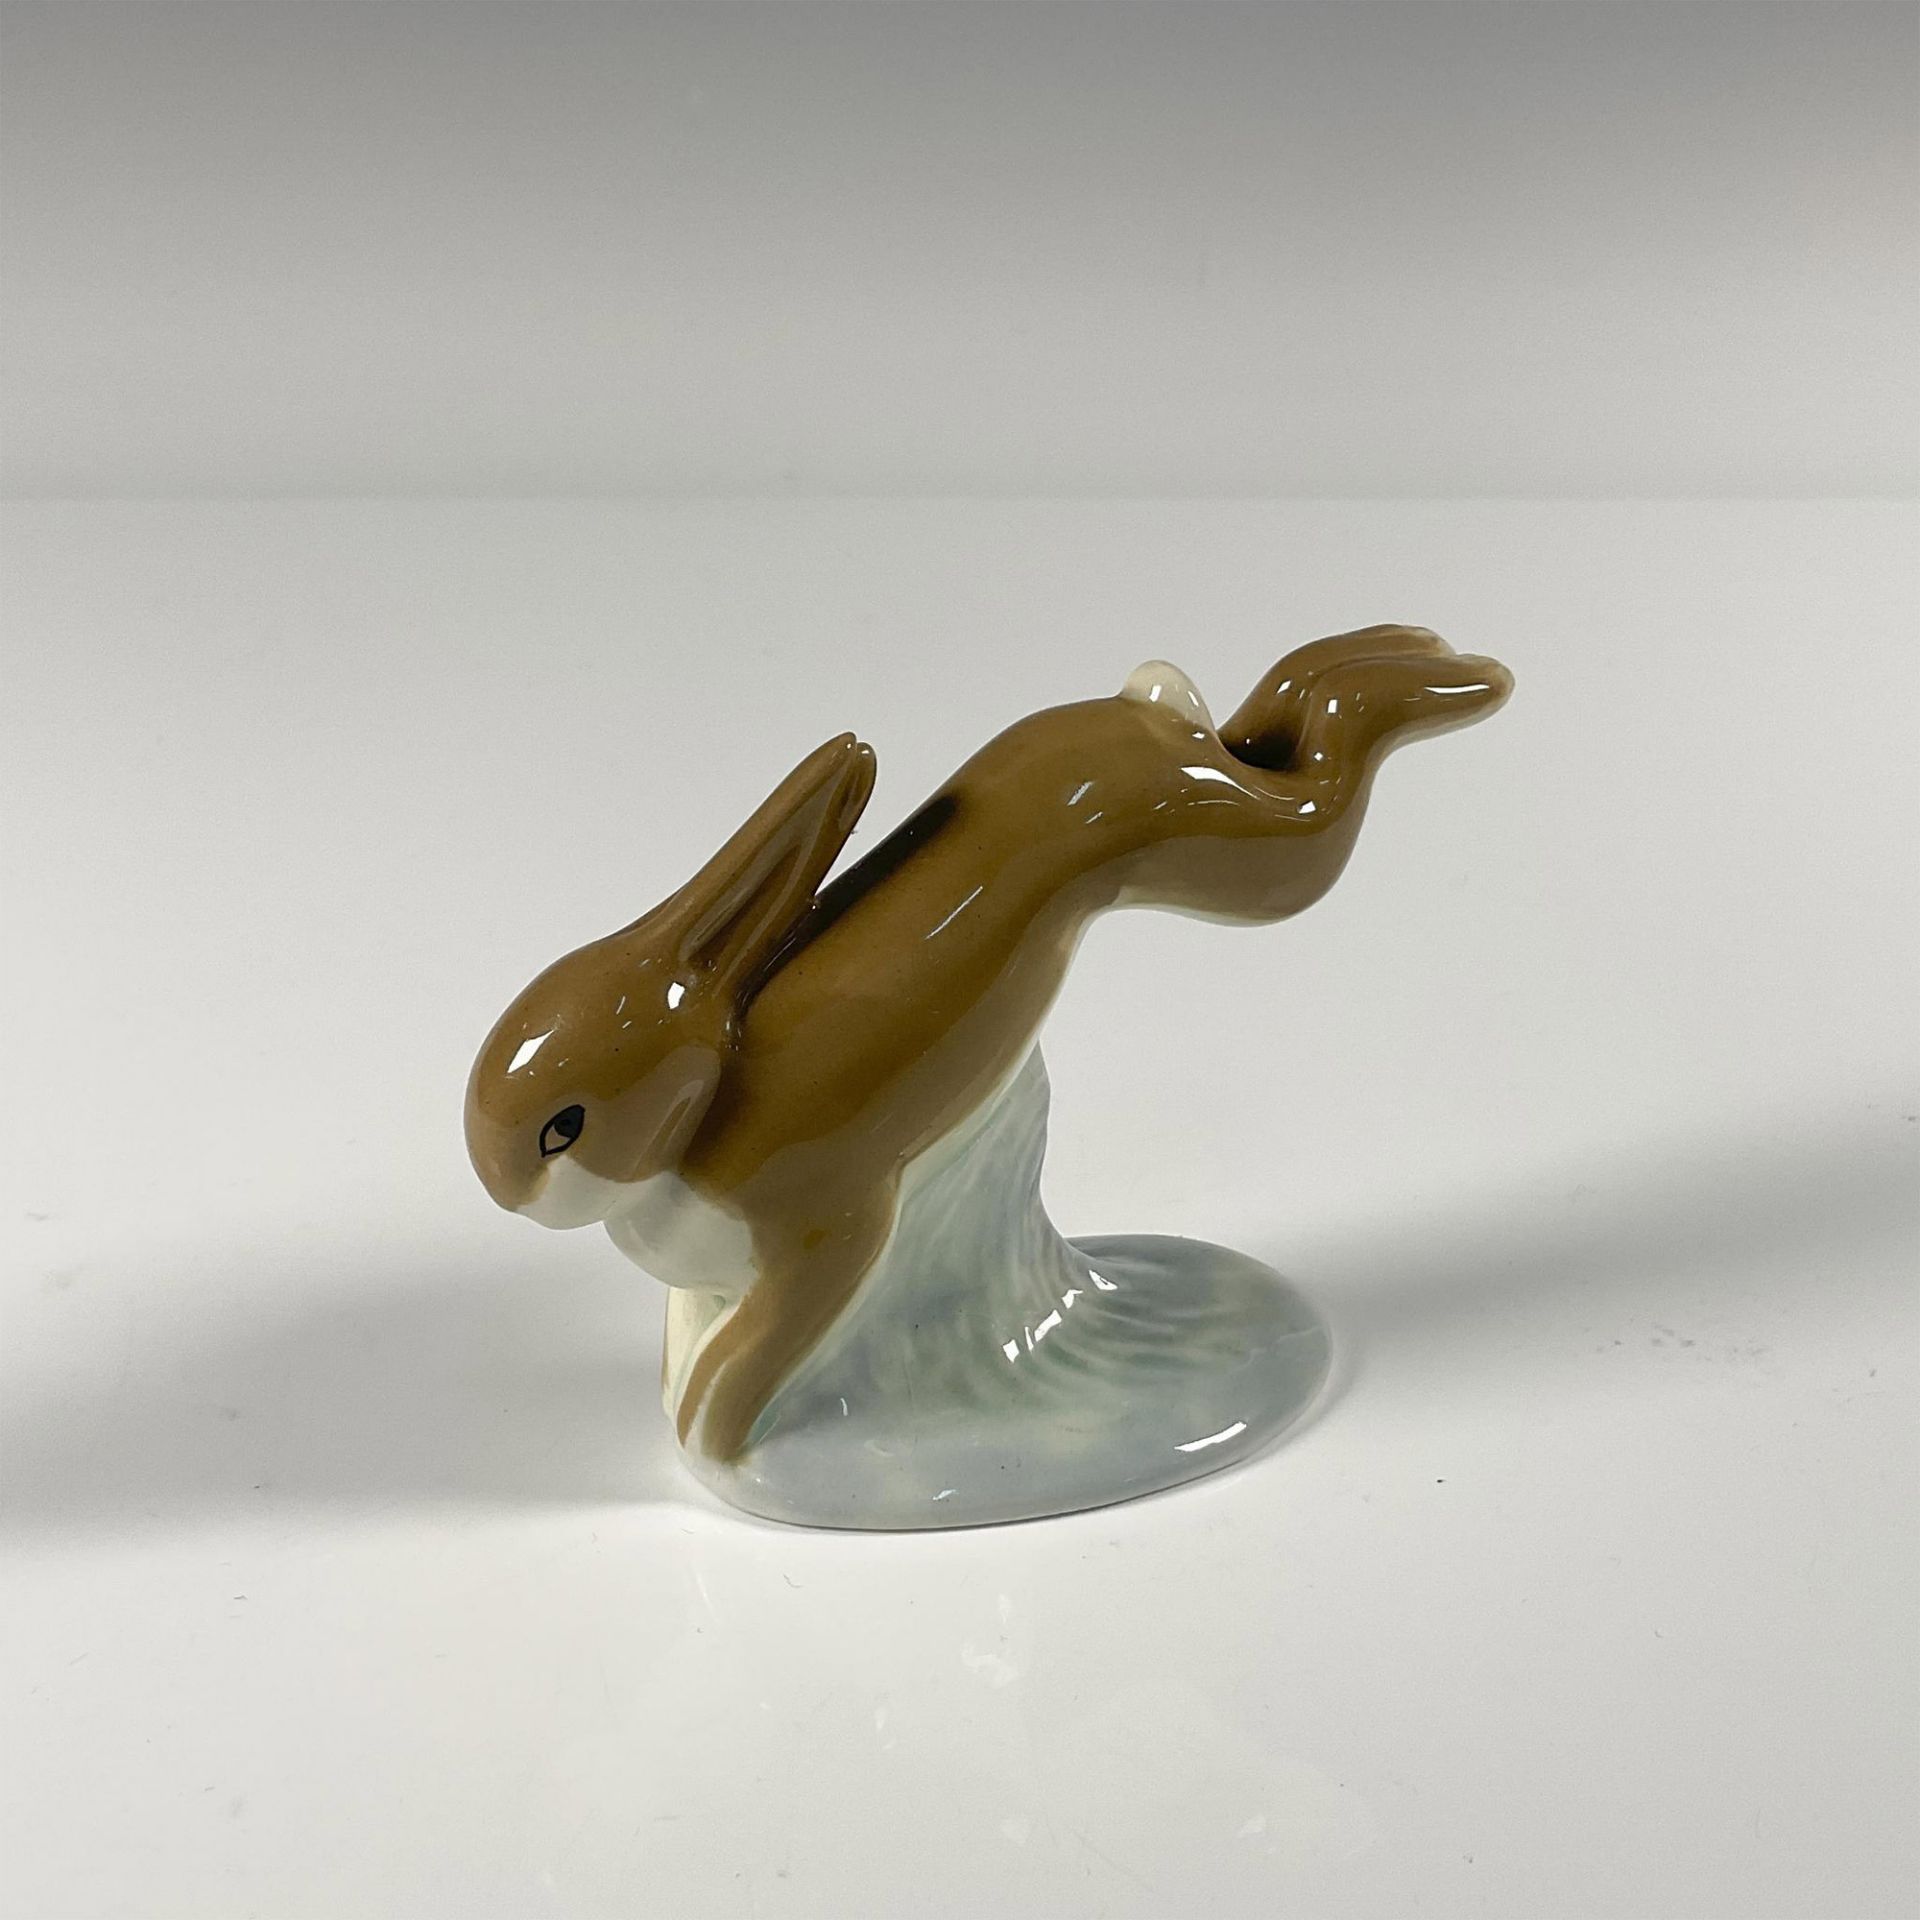 Midminter Porcelain Figurine, Leaping Rabbit